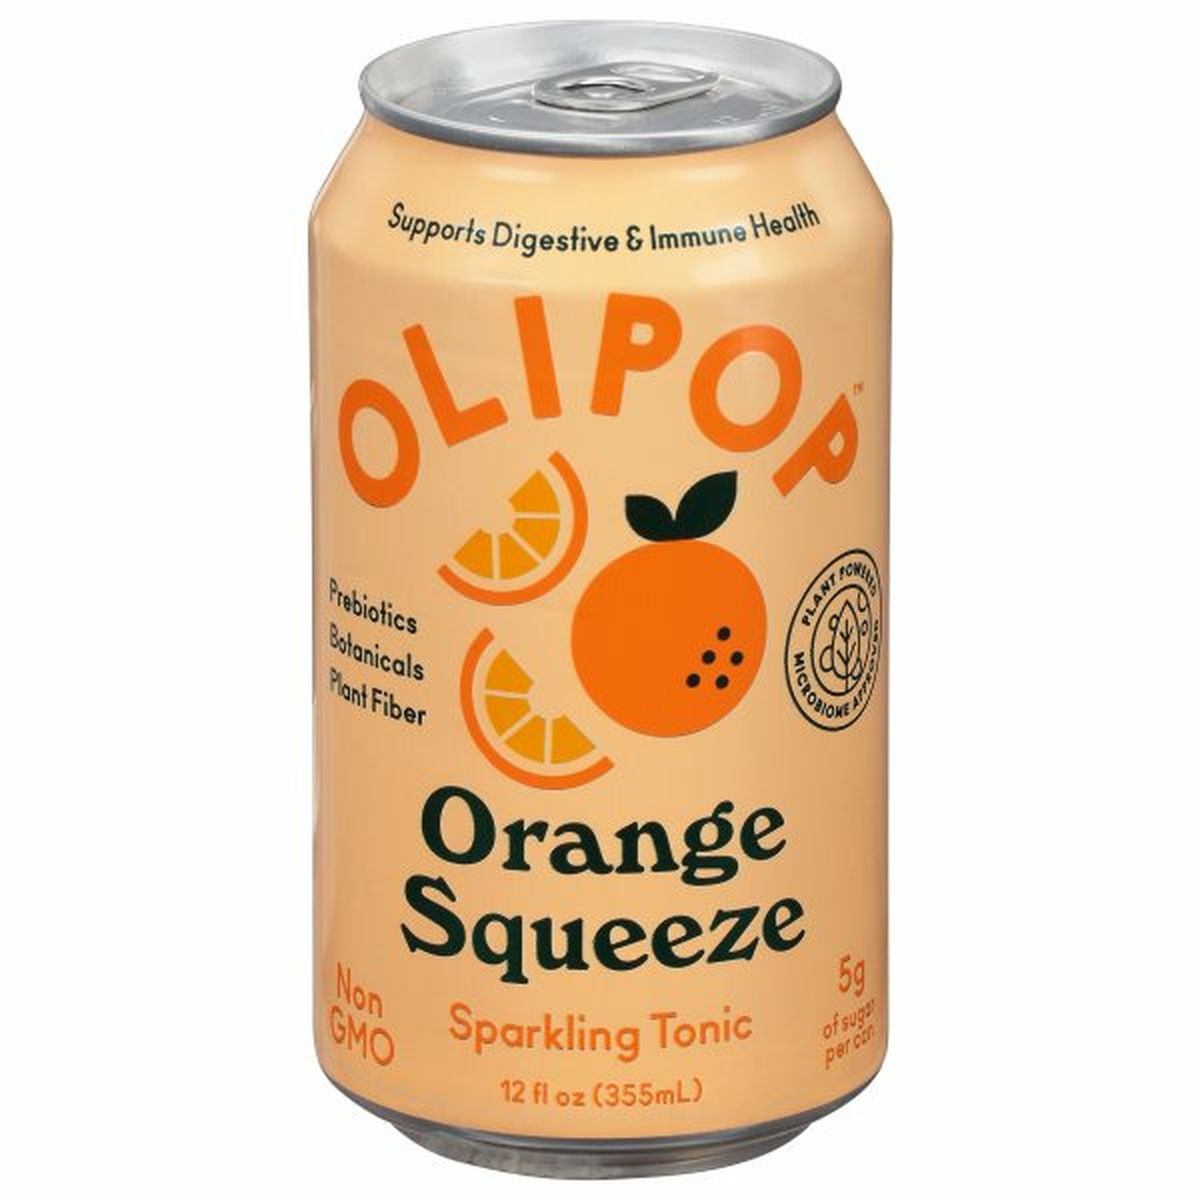 Calories in Olipop Sparkling Tonic, Orange Squeeze